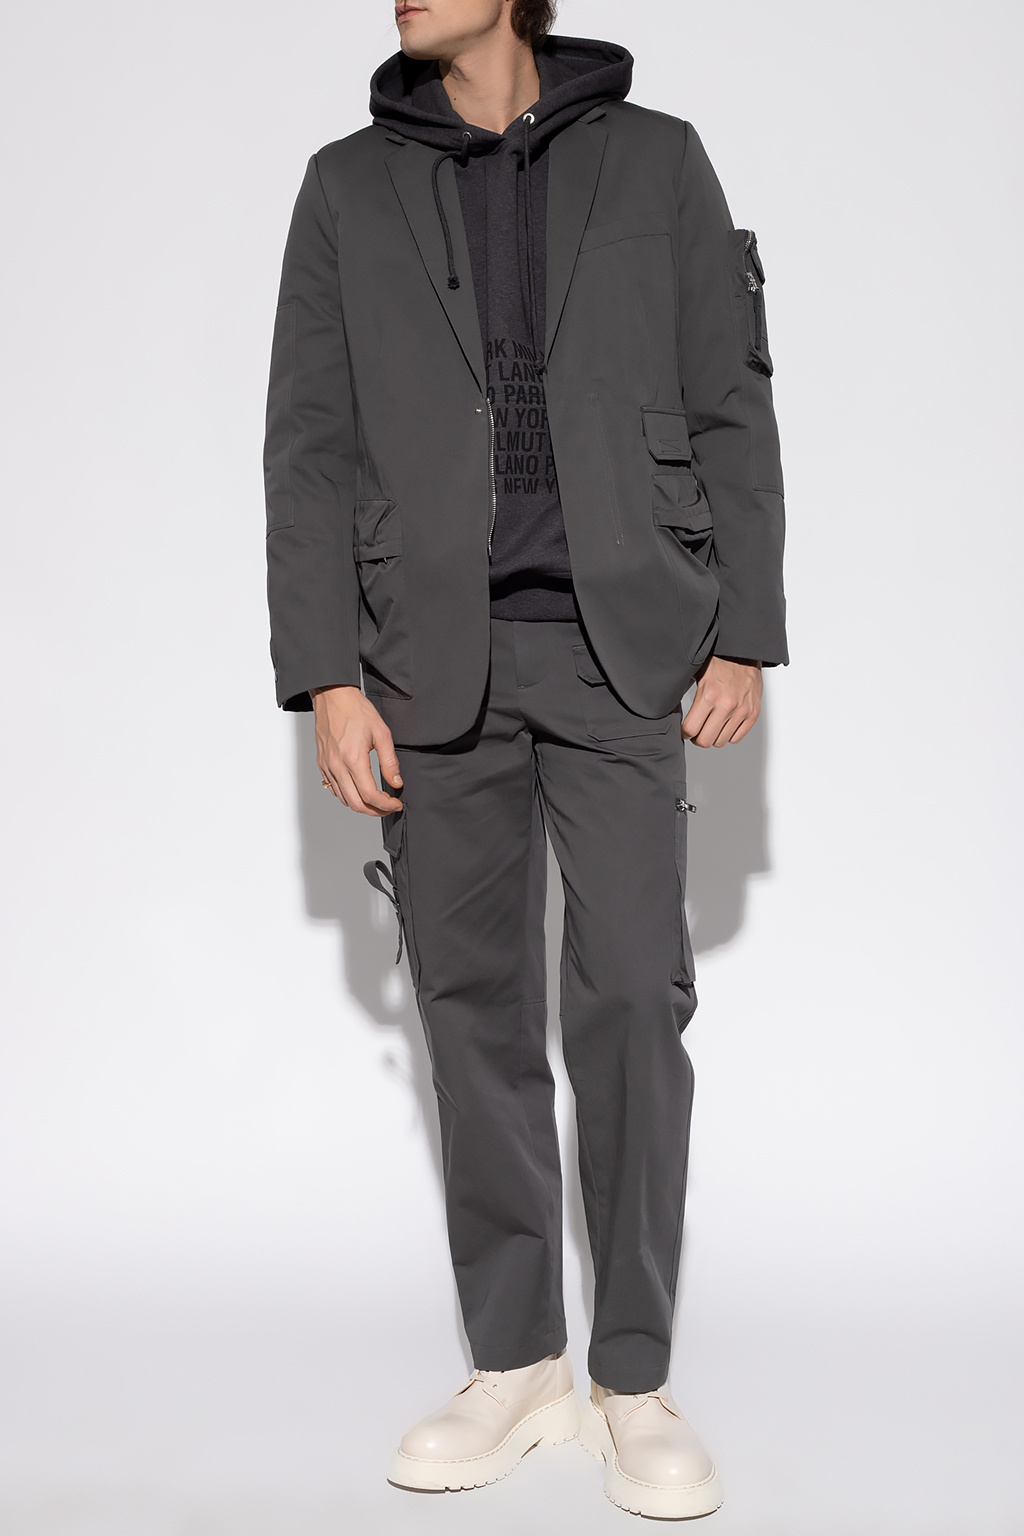 Helmut Lang Cotton jacket | Men's Clothing | Vitkac